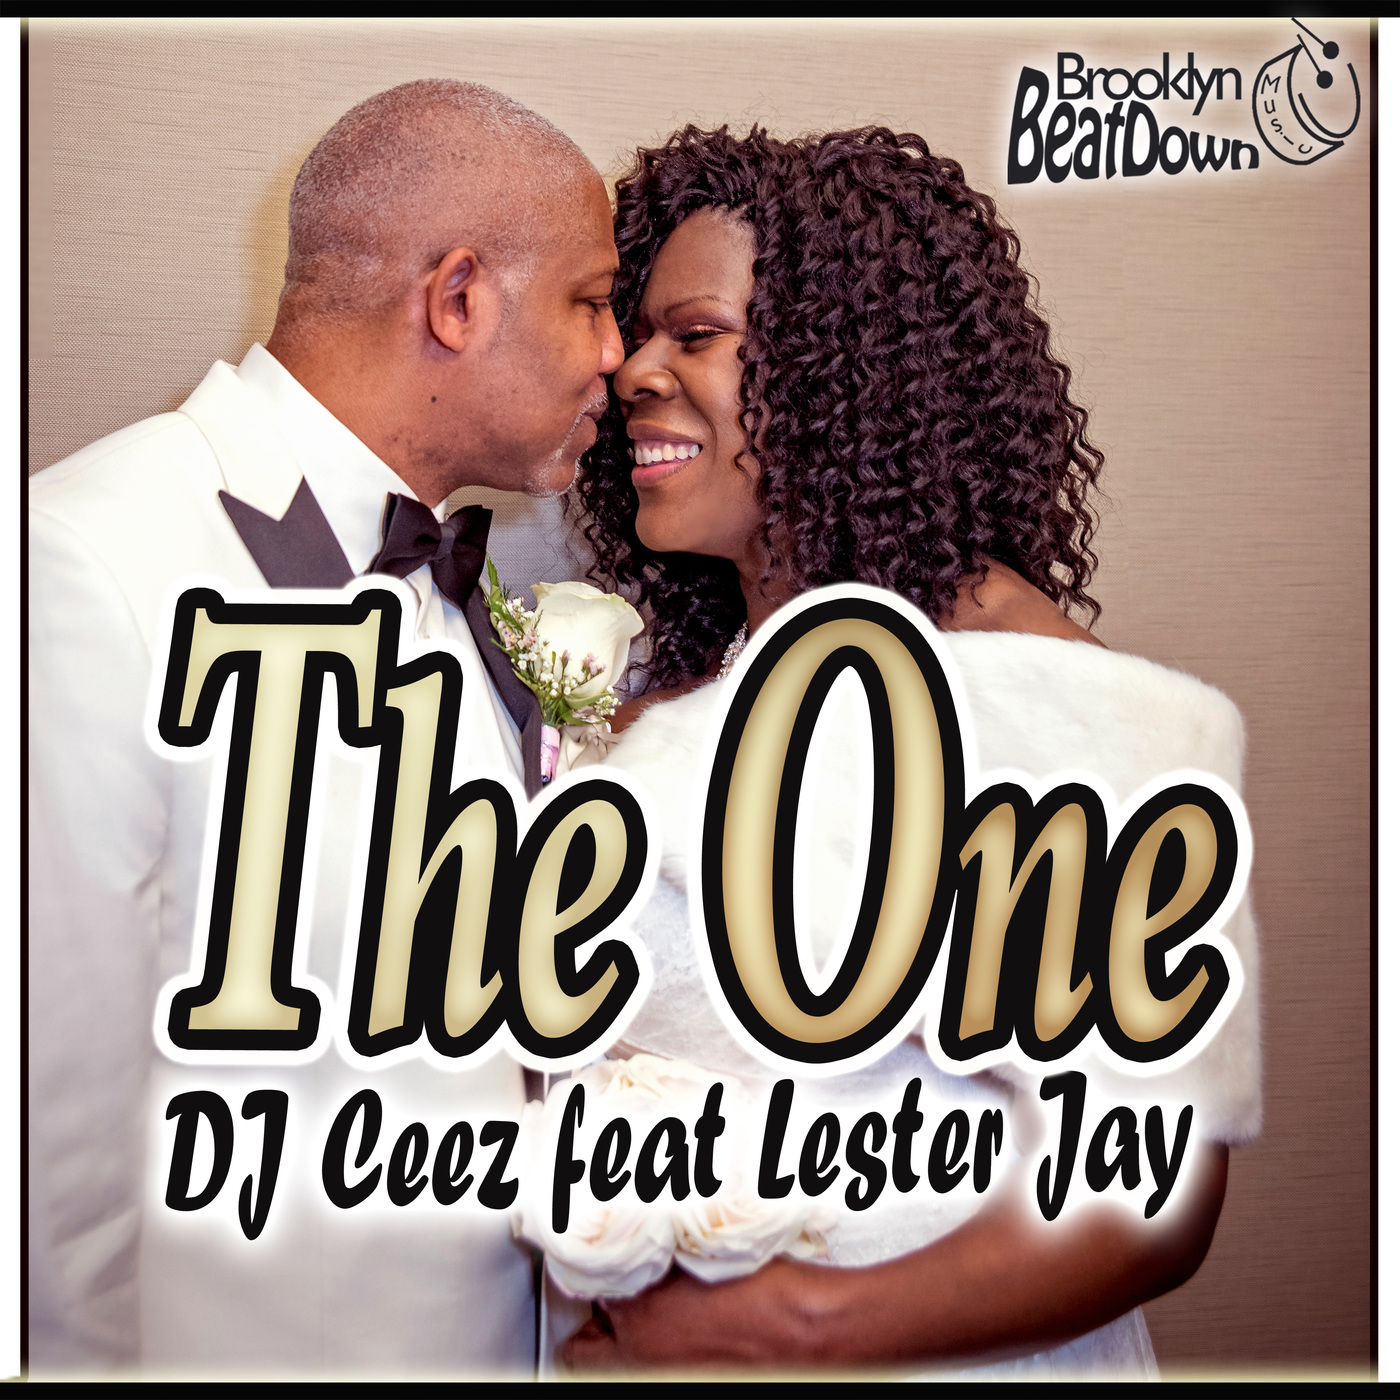 DJ Ceez - The One (Original Vocal Mix) / Brooklyn BeatDown Music